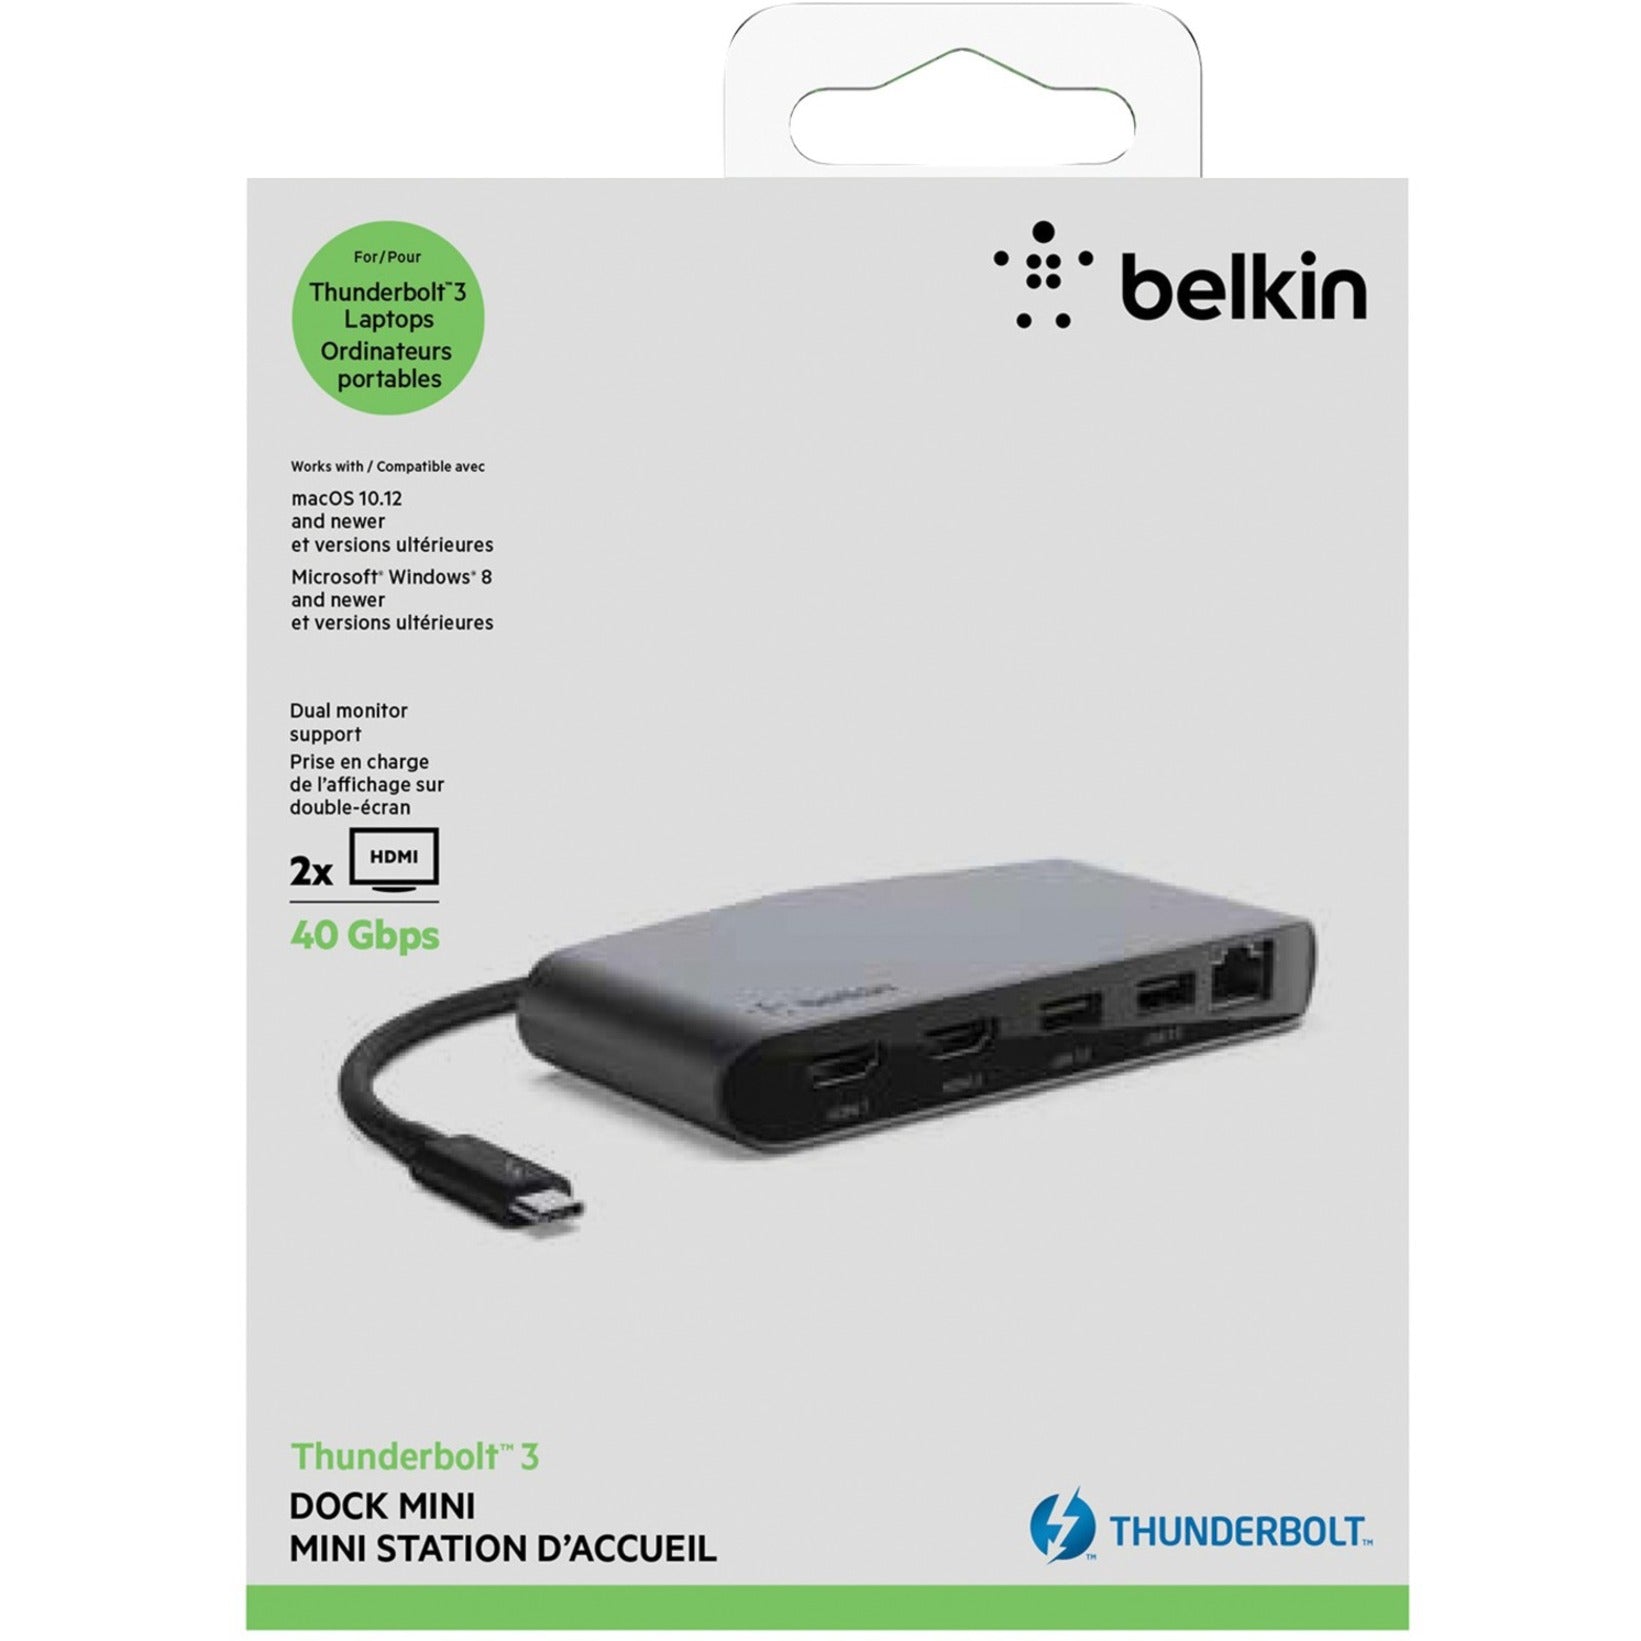 Belkin F4U098BT Thunderbolt 3 Dock Mini HD Dual 4k Display @60Hz MacOS and Windows Compatible